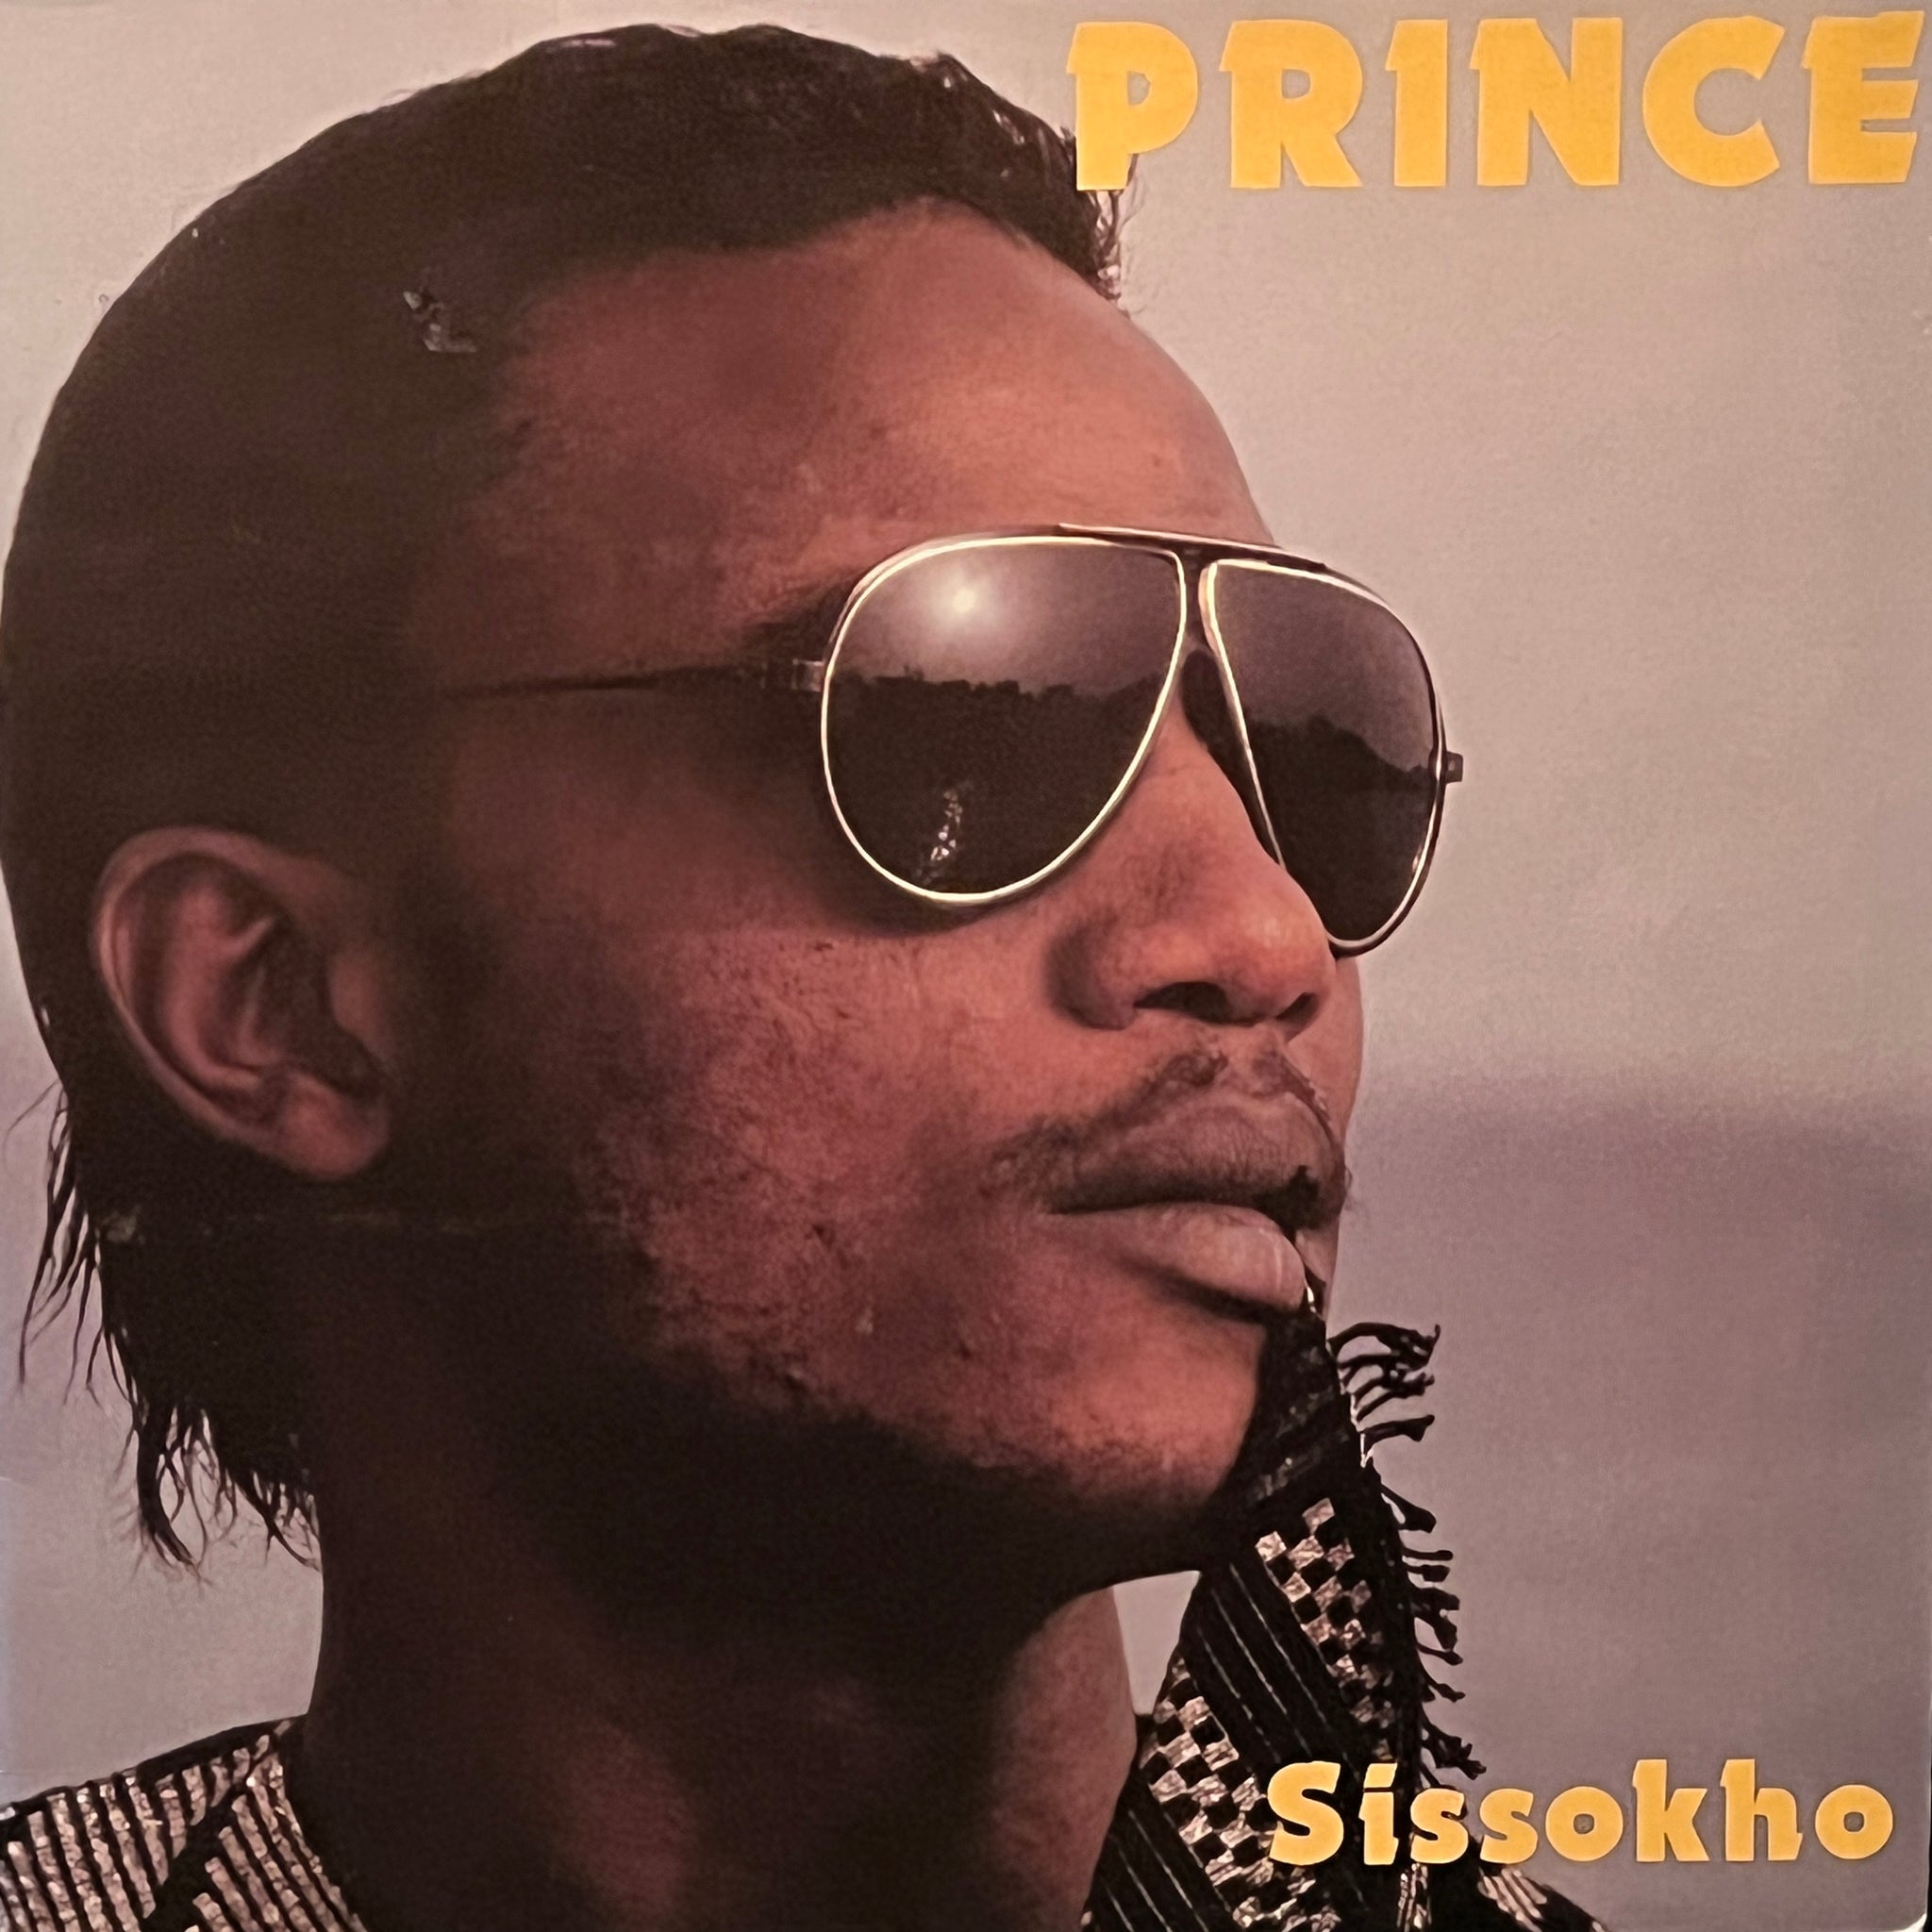 Prince Sissokho – Prince Sissokho